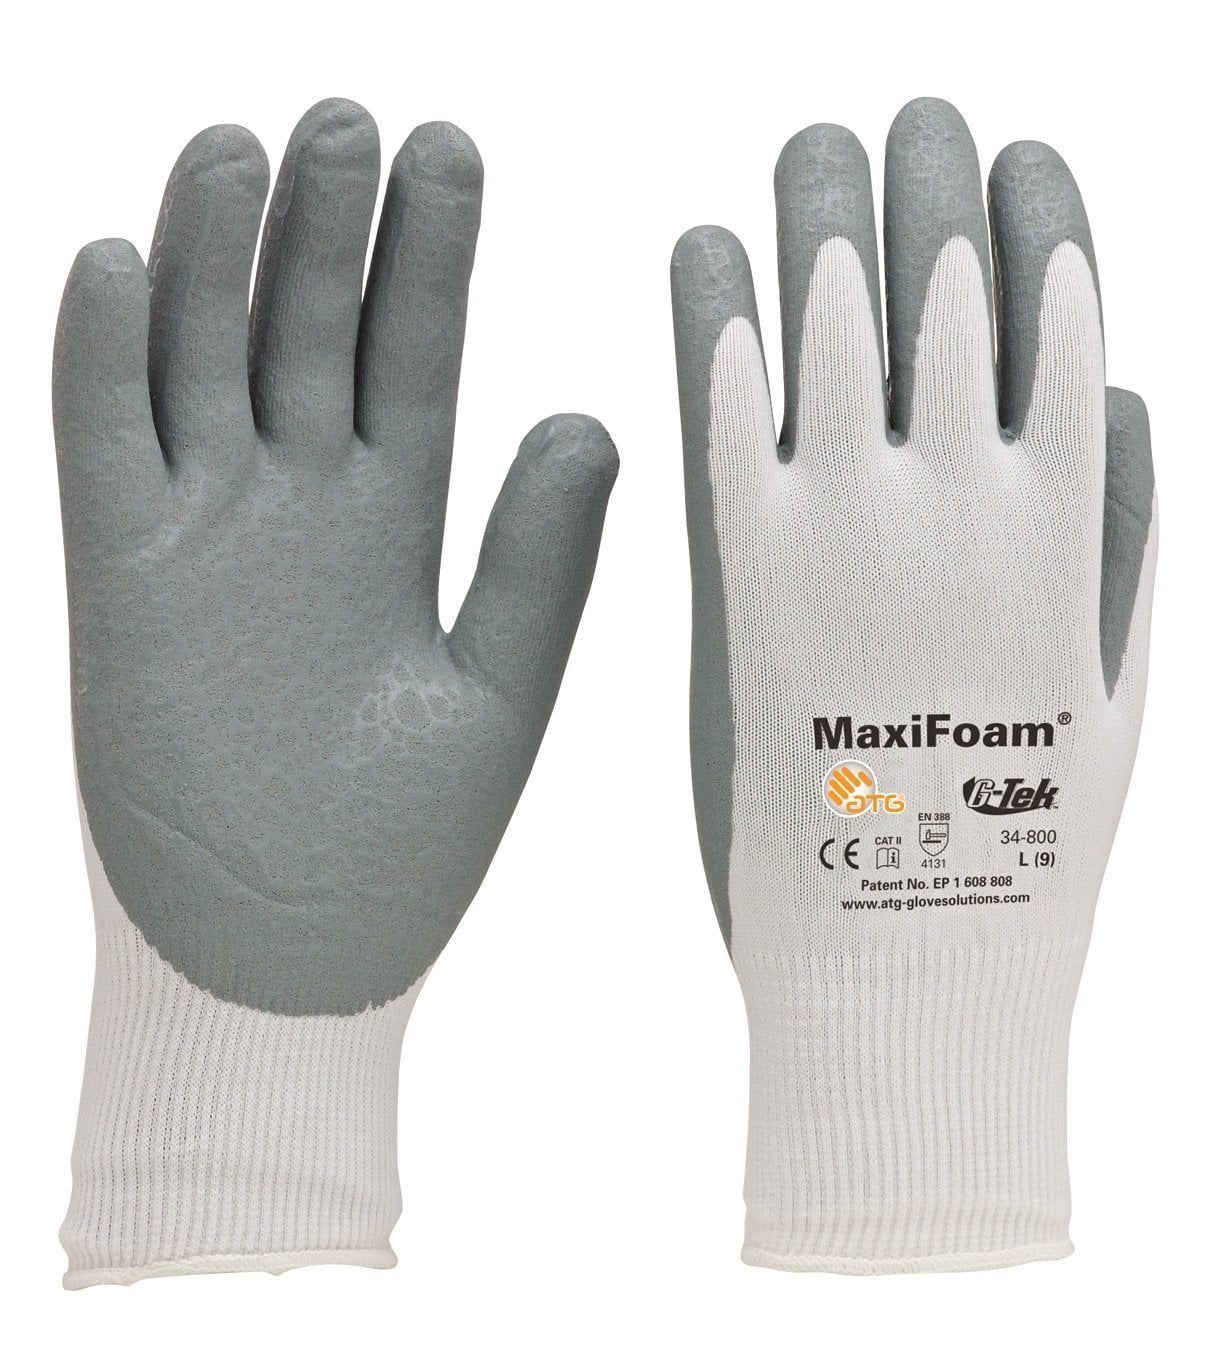 G & F 15196 Medium Premium Nitrile Coated Work Gloves Gray/Black 6 Pair Pack 